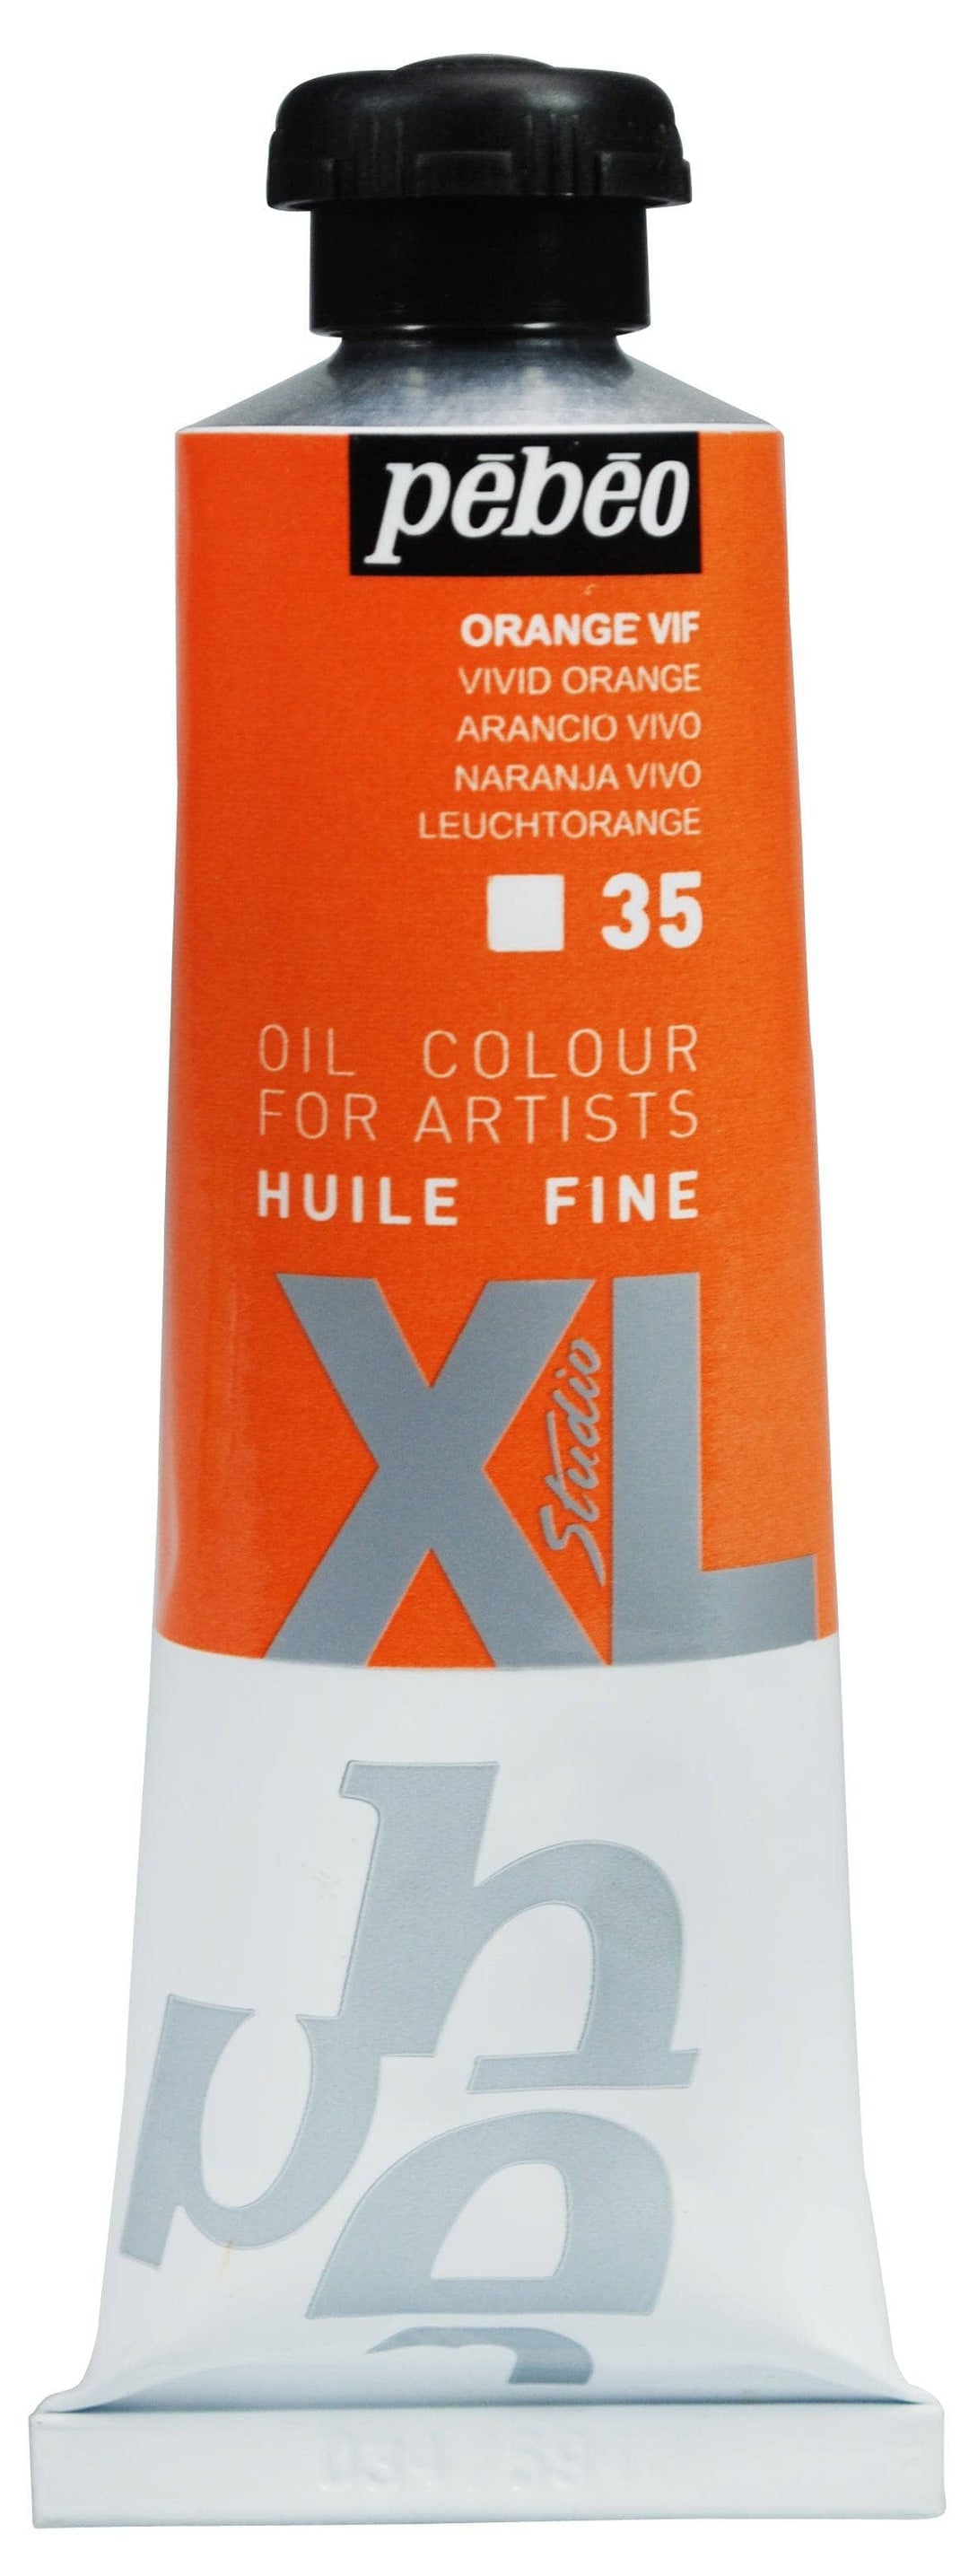 Huile fine Studio XL 37ml - Orange Vif
PB937035